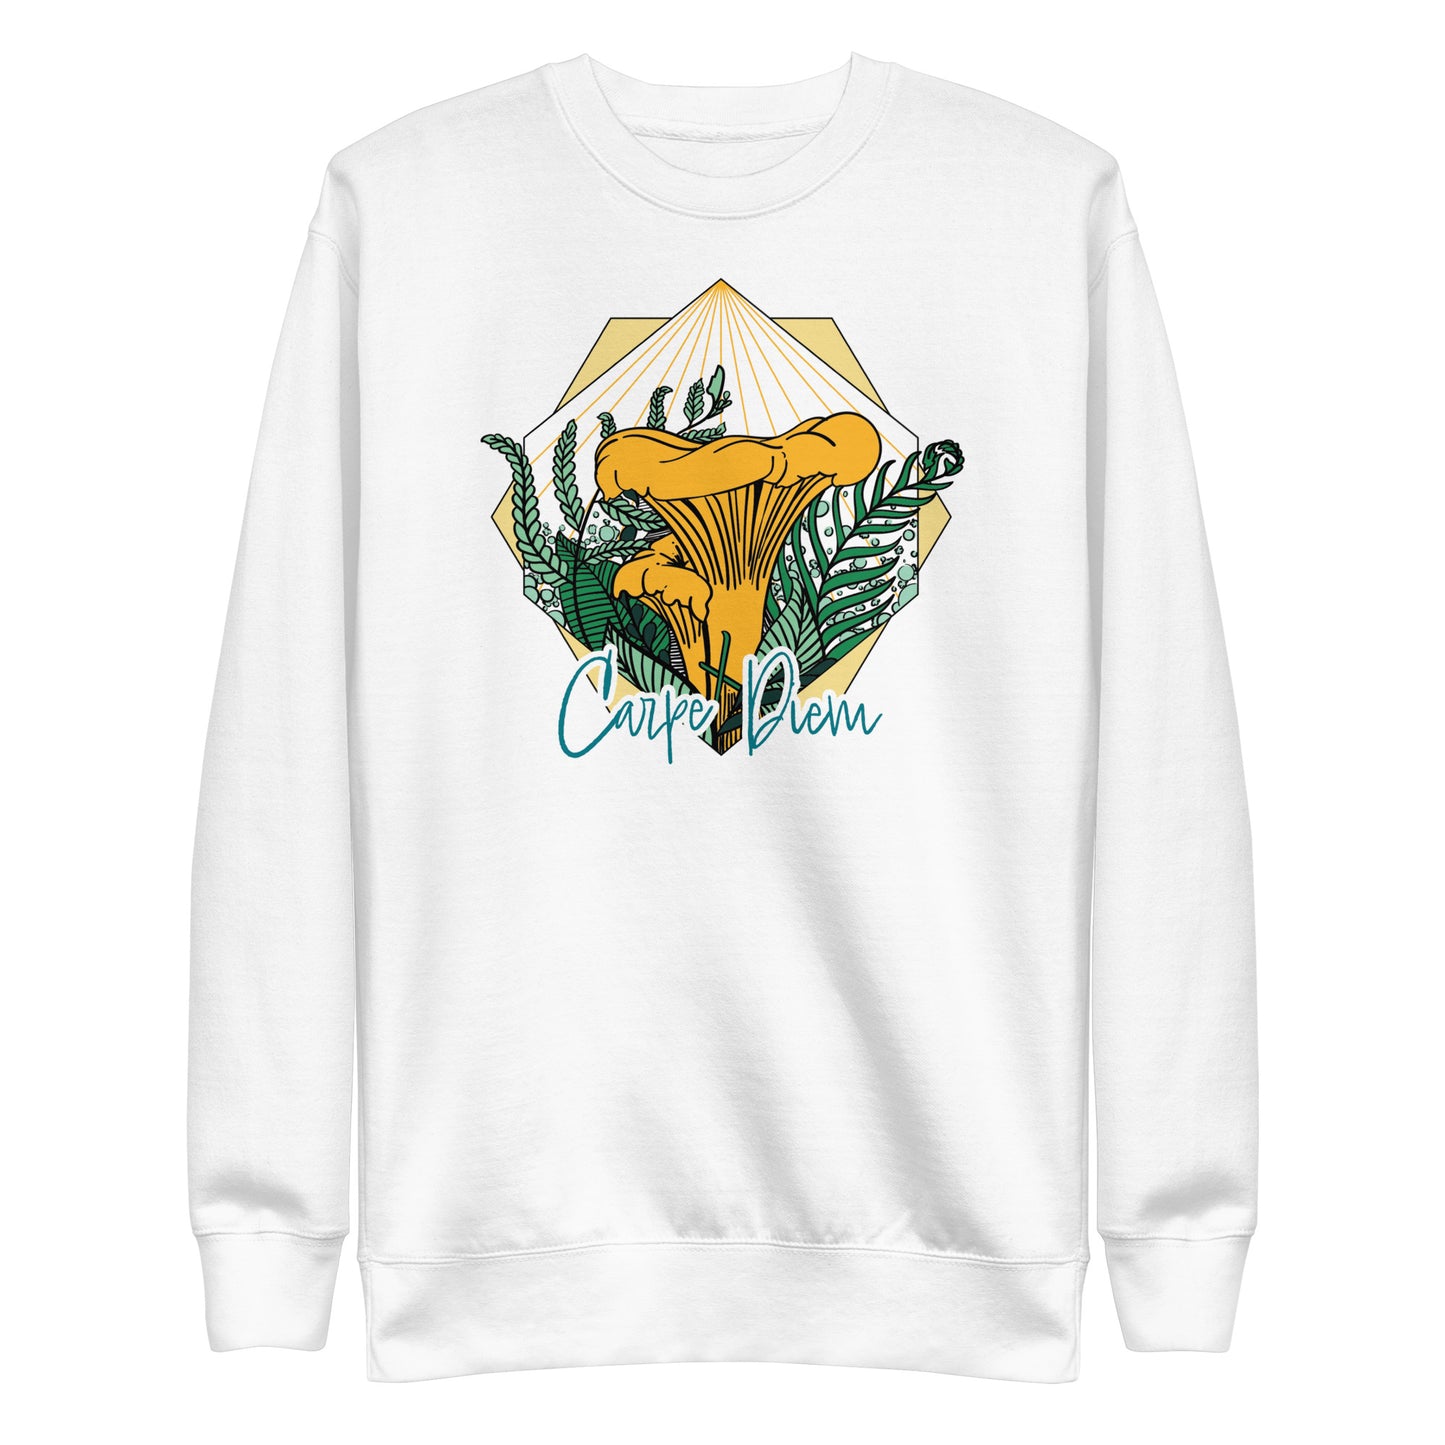 Carpe Diem Chanterelle | Unisex Sweatshirt | Cheery Mushroom Apparel